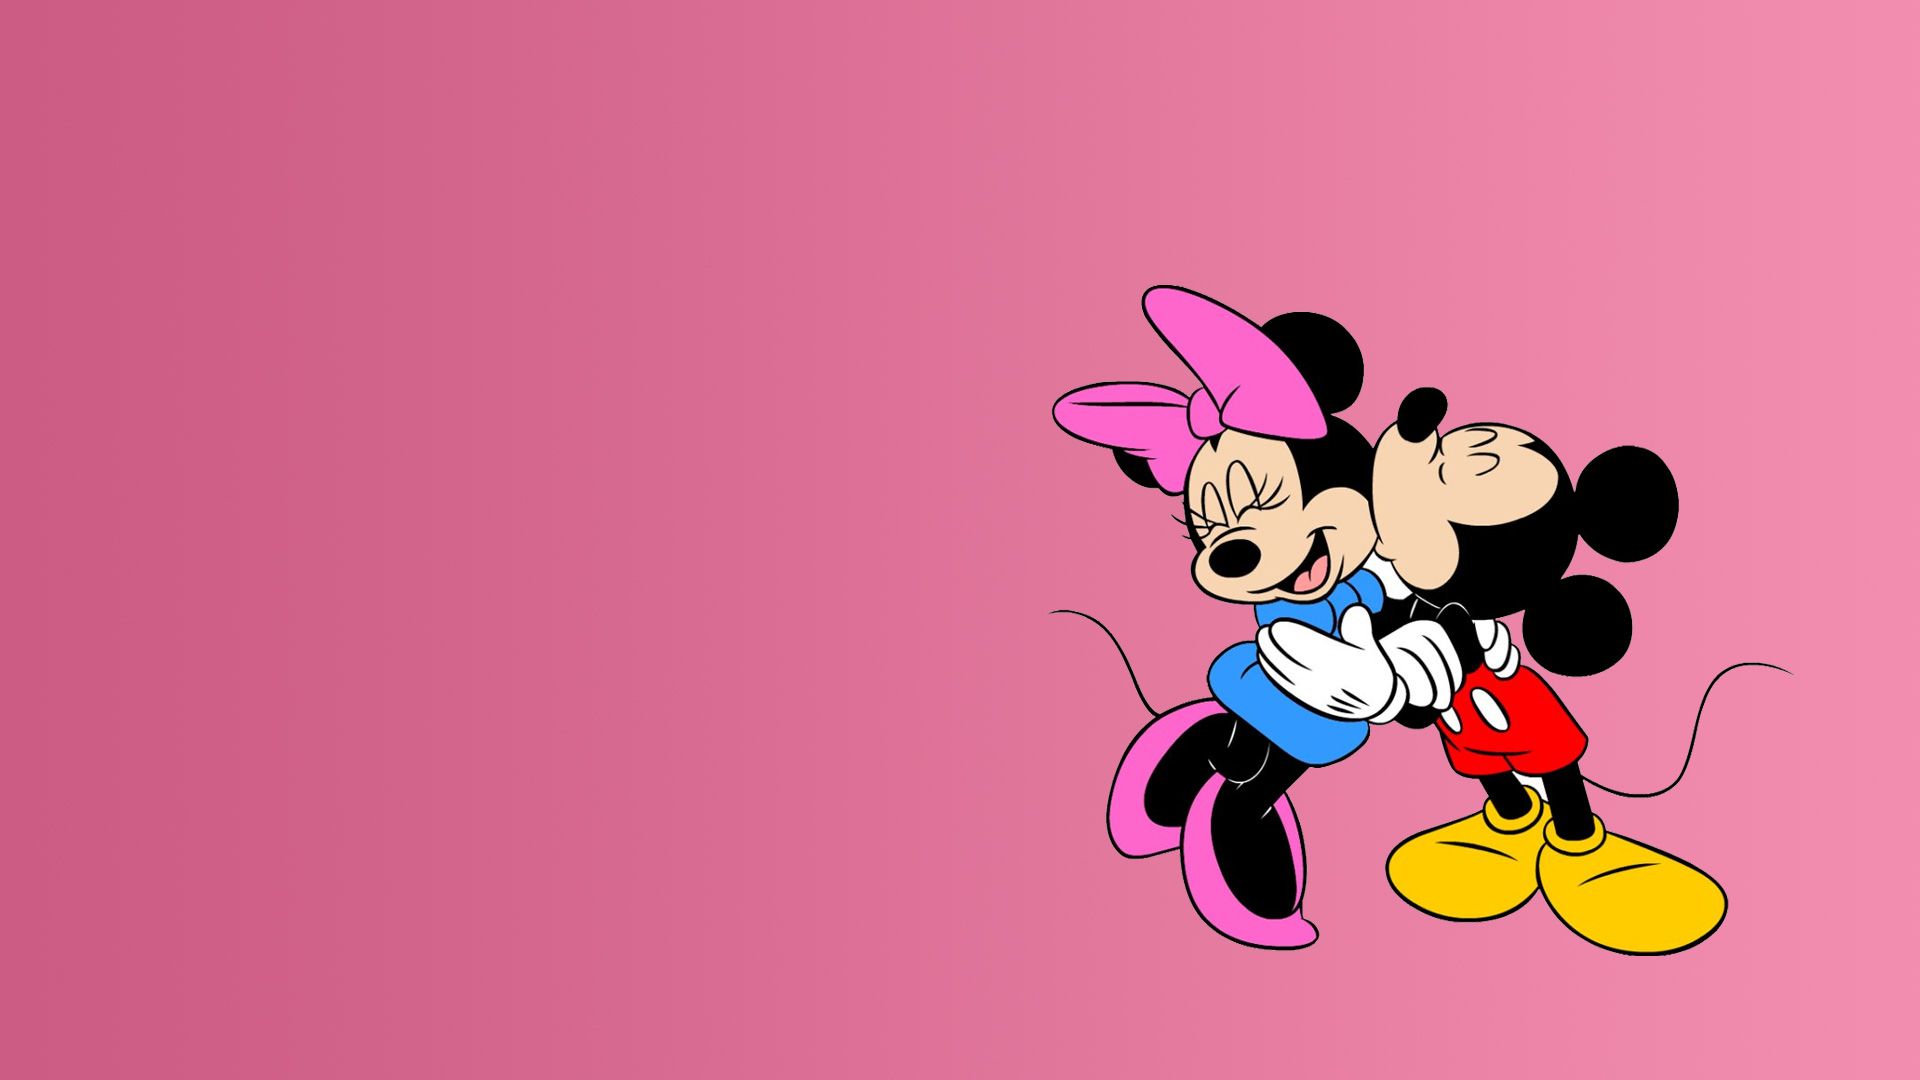 Fondos de pantalla de Minnie Mouse - FondosMil